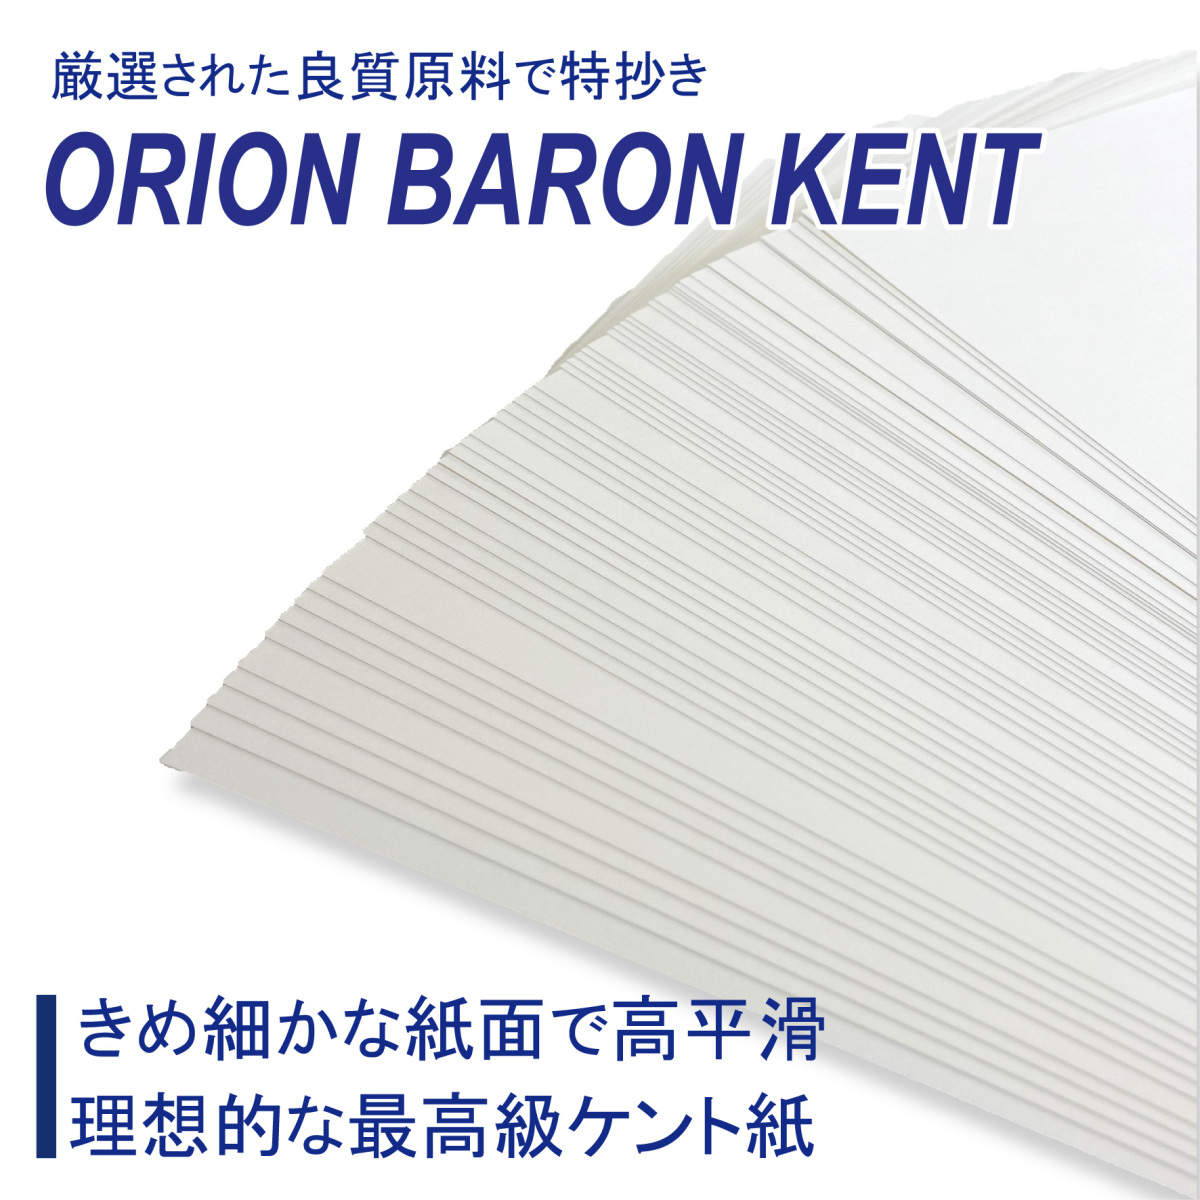  кент бумага Orion ba long кент бумага #250 &lt;220kg&gt; 50 листов входит B5 размер 